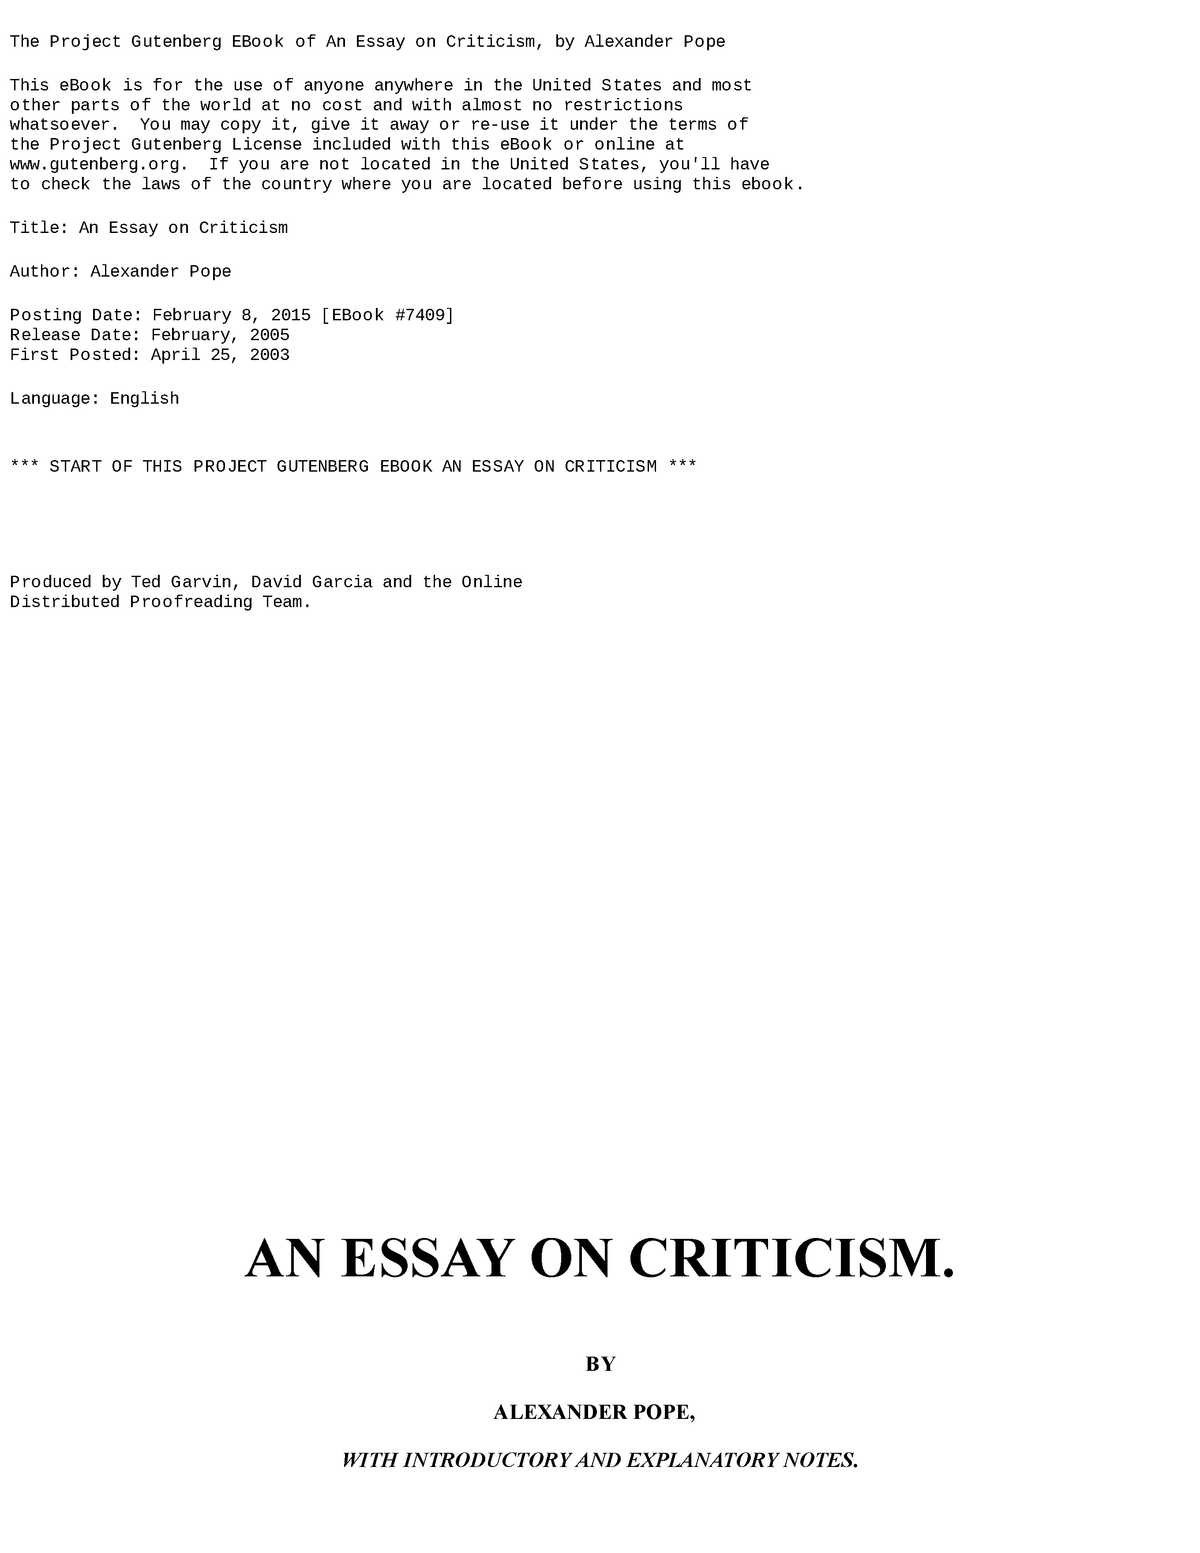 pope essay on criticism pdf